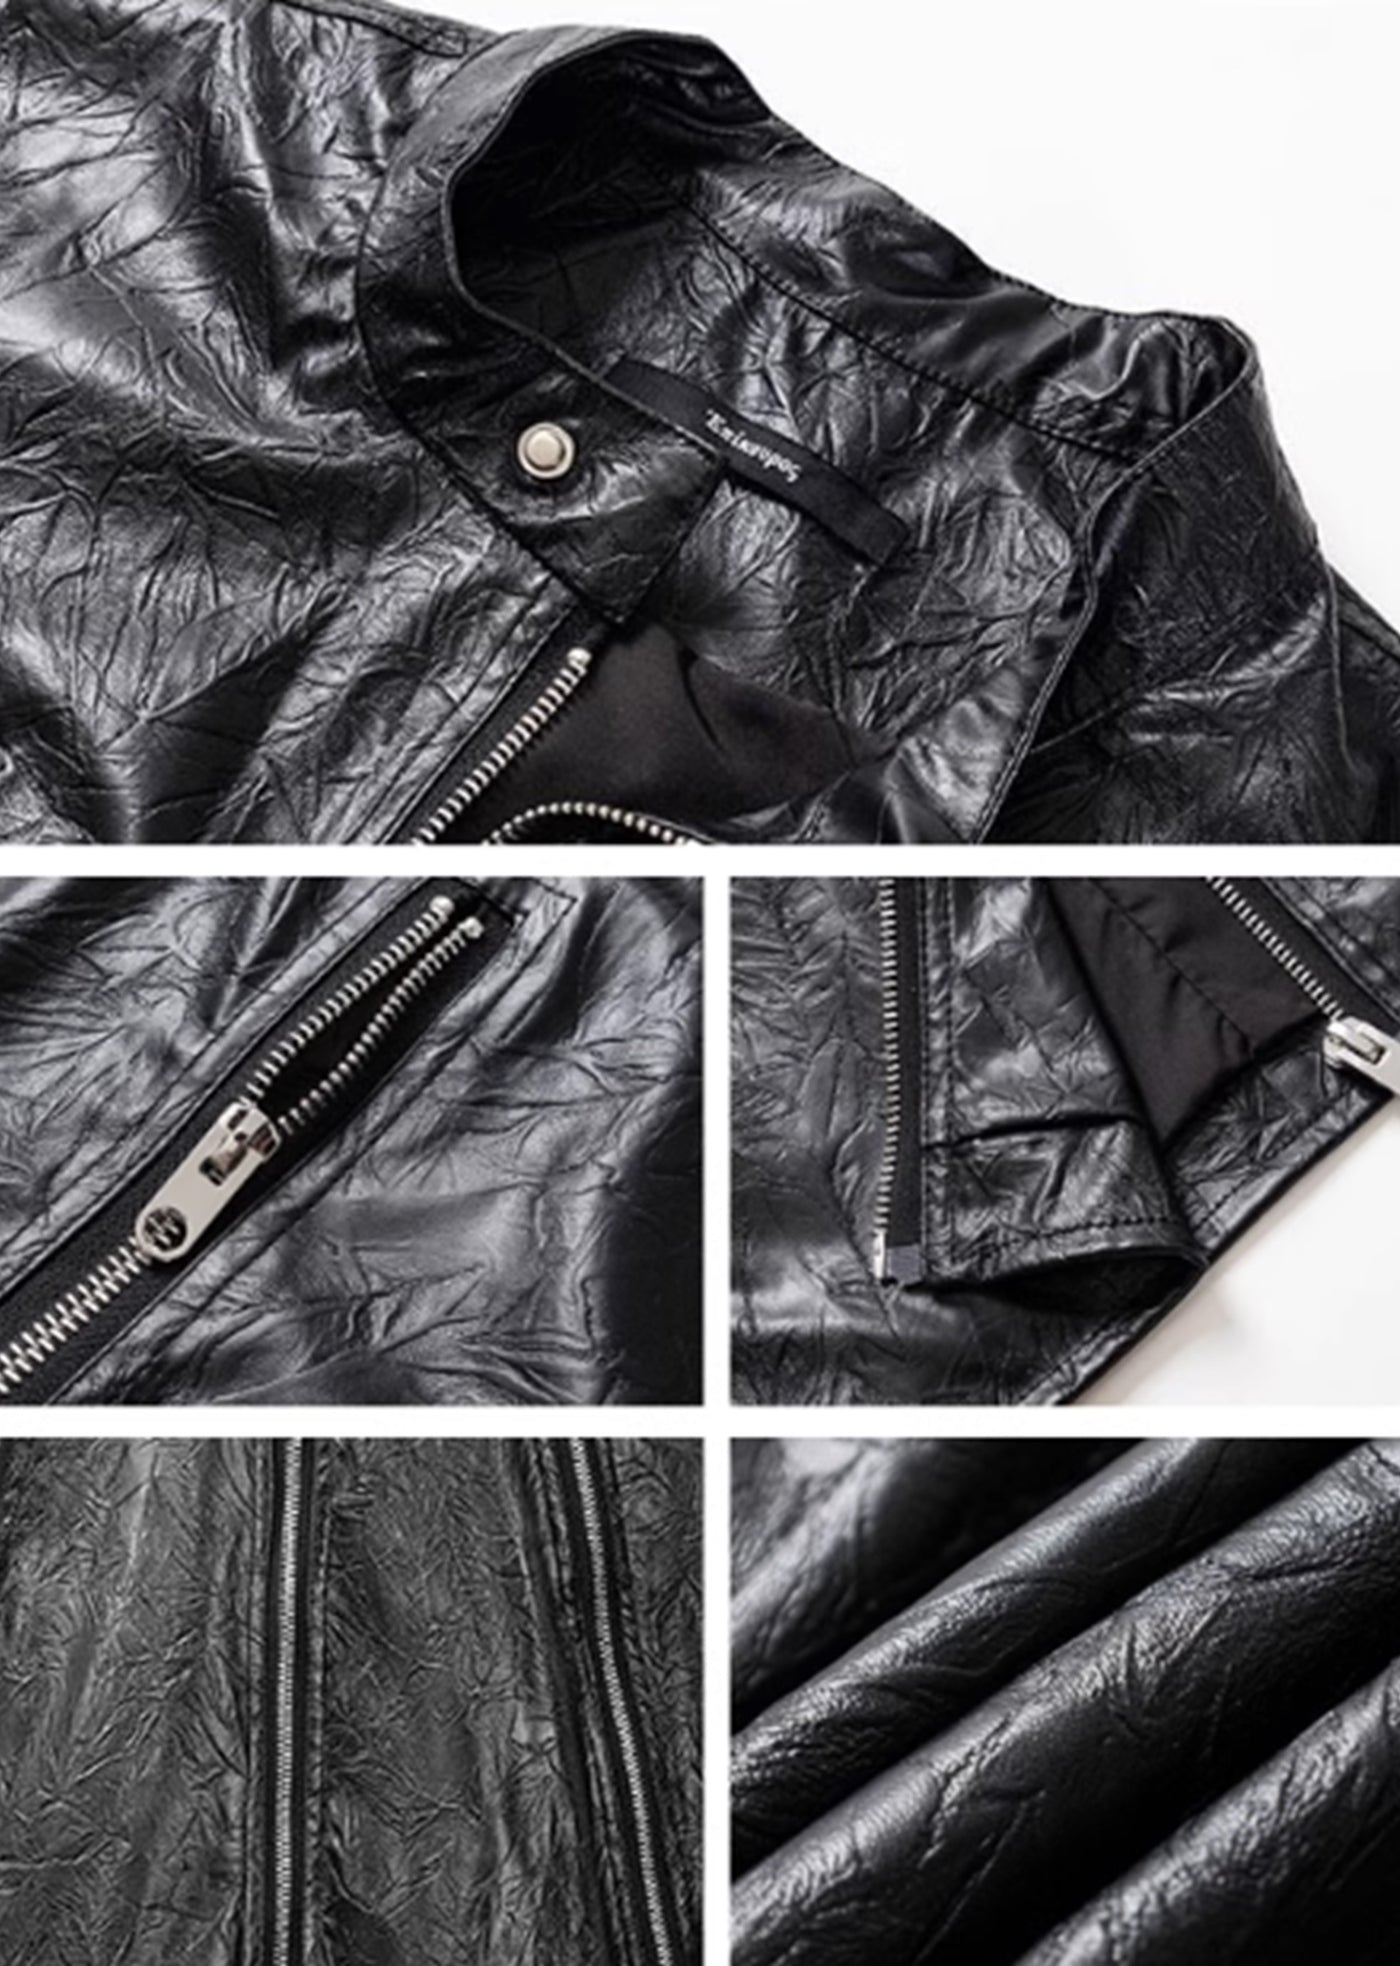 [BLACK BB] Black leather textured shiny flix vest BK0020